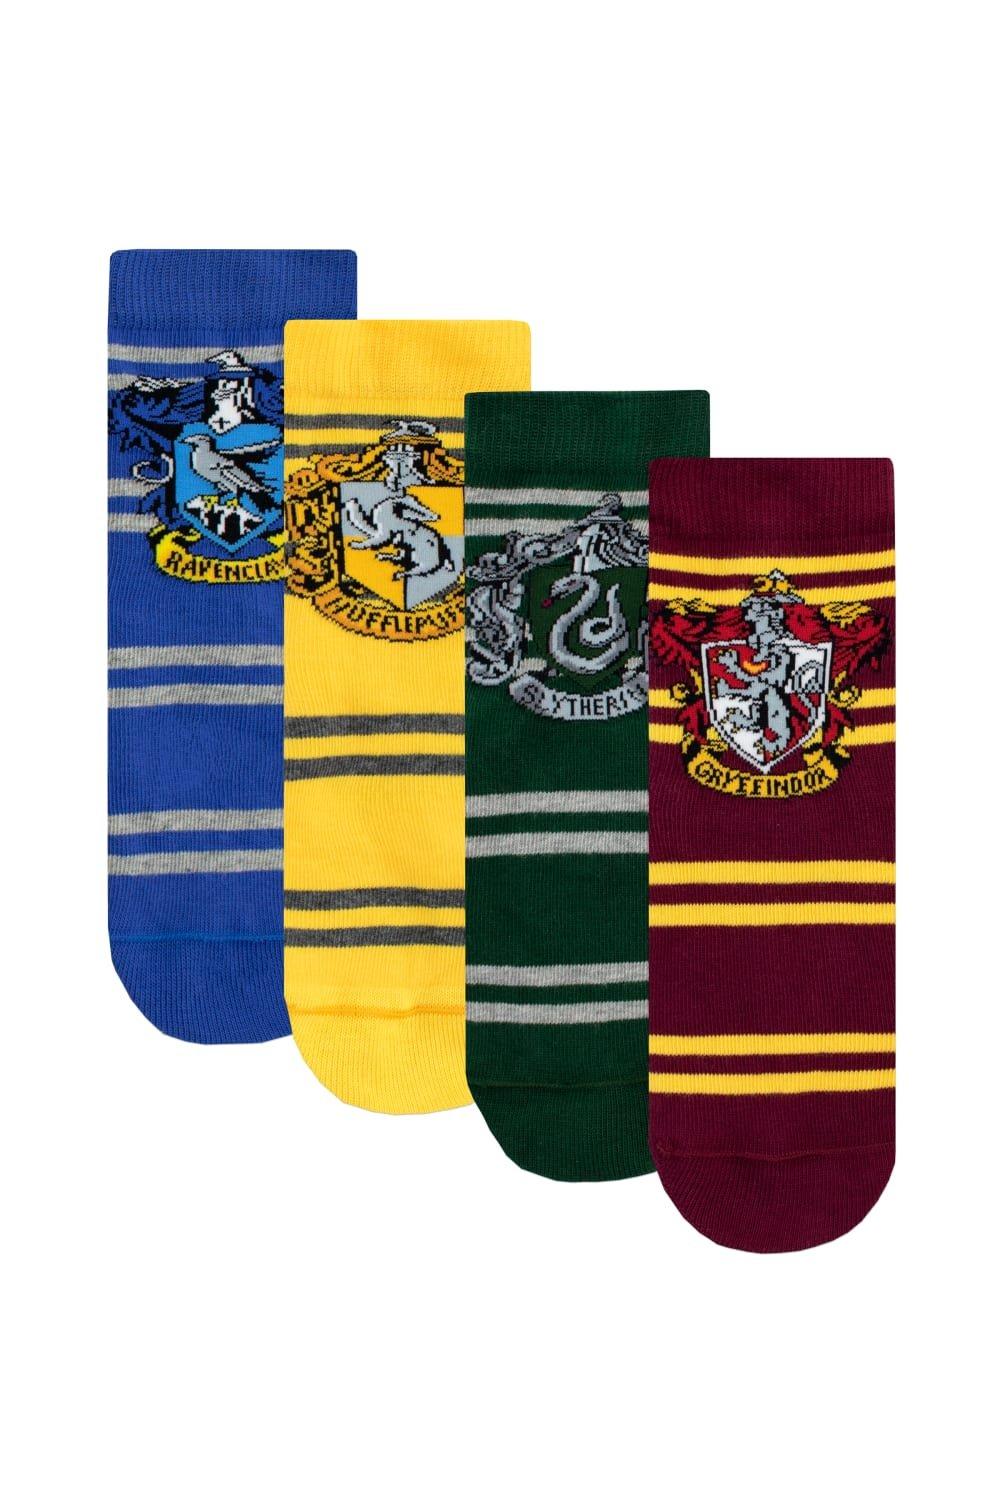 Hogwarts Gryffindor Slytherin Hufflepuff And Ravenclaw Socks 4 Pack